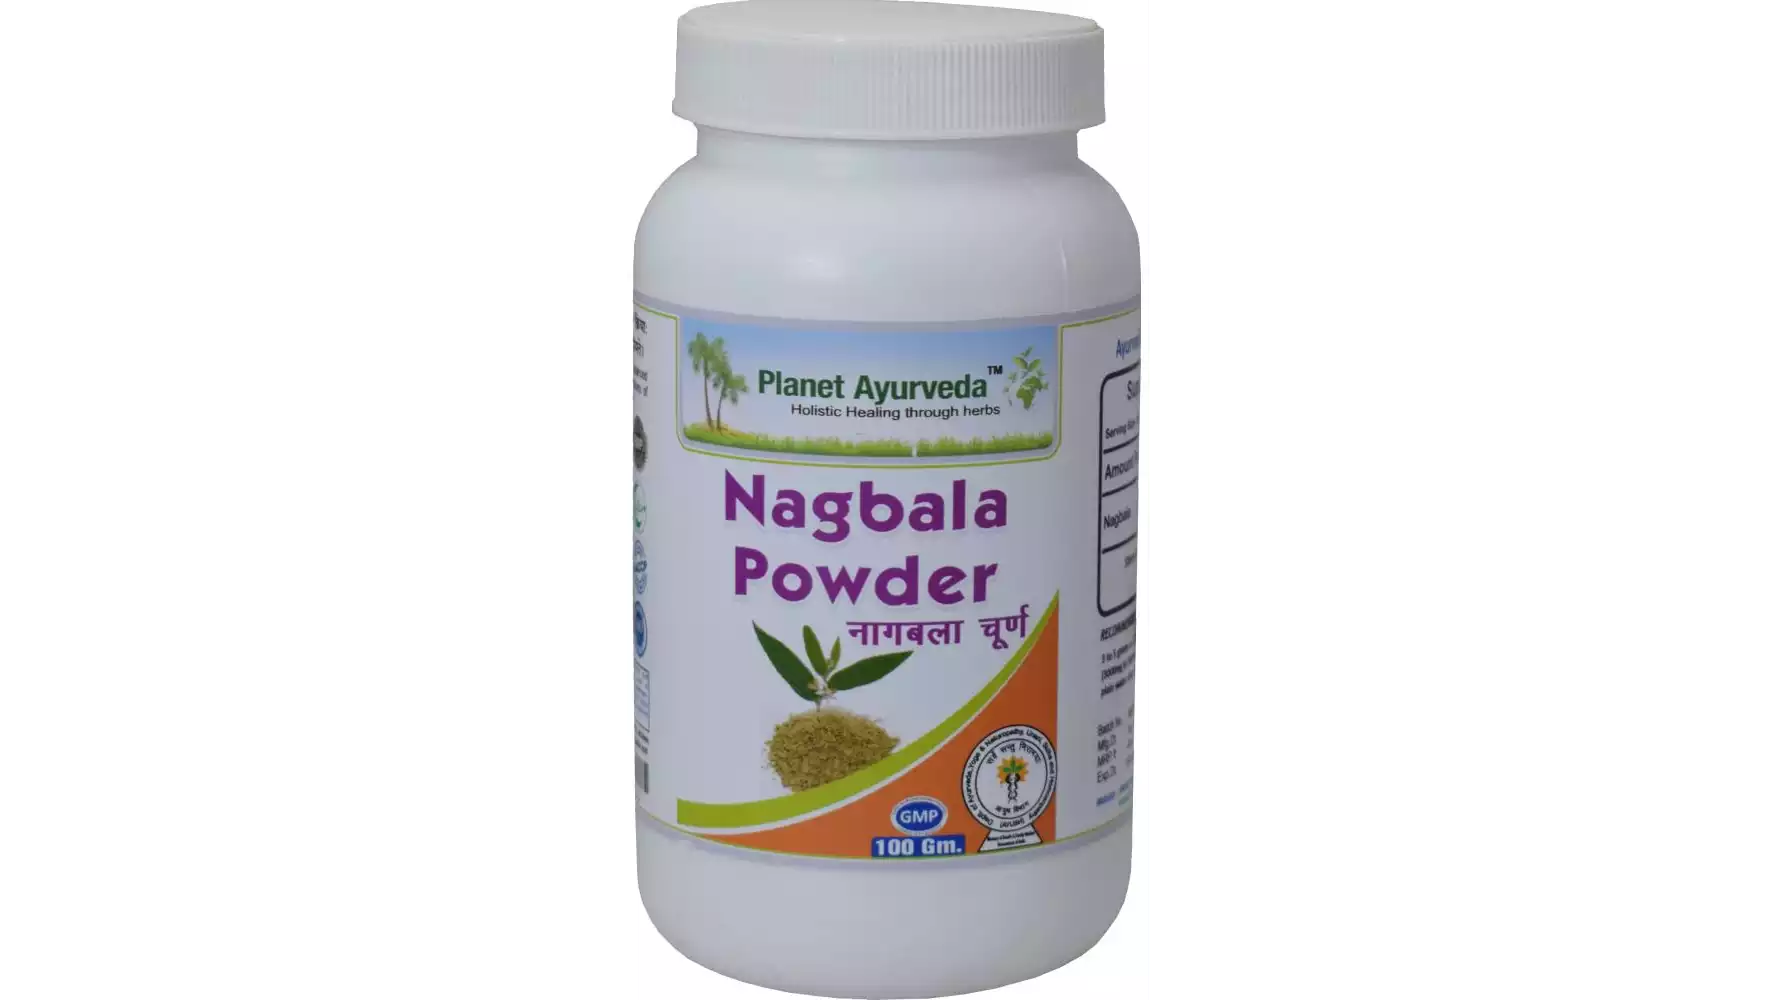 Planet Ayurveda Nagbala Powder (100g, Pack of 2)